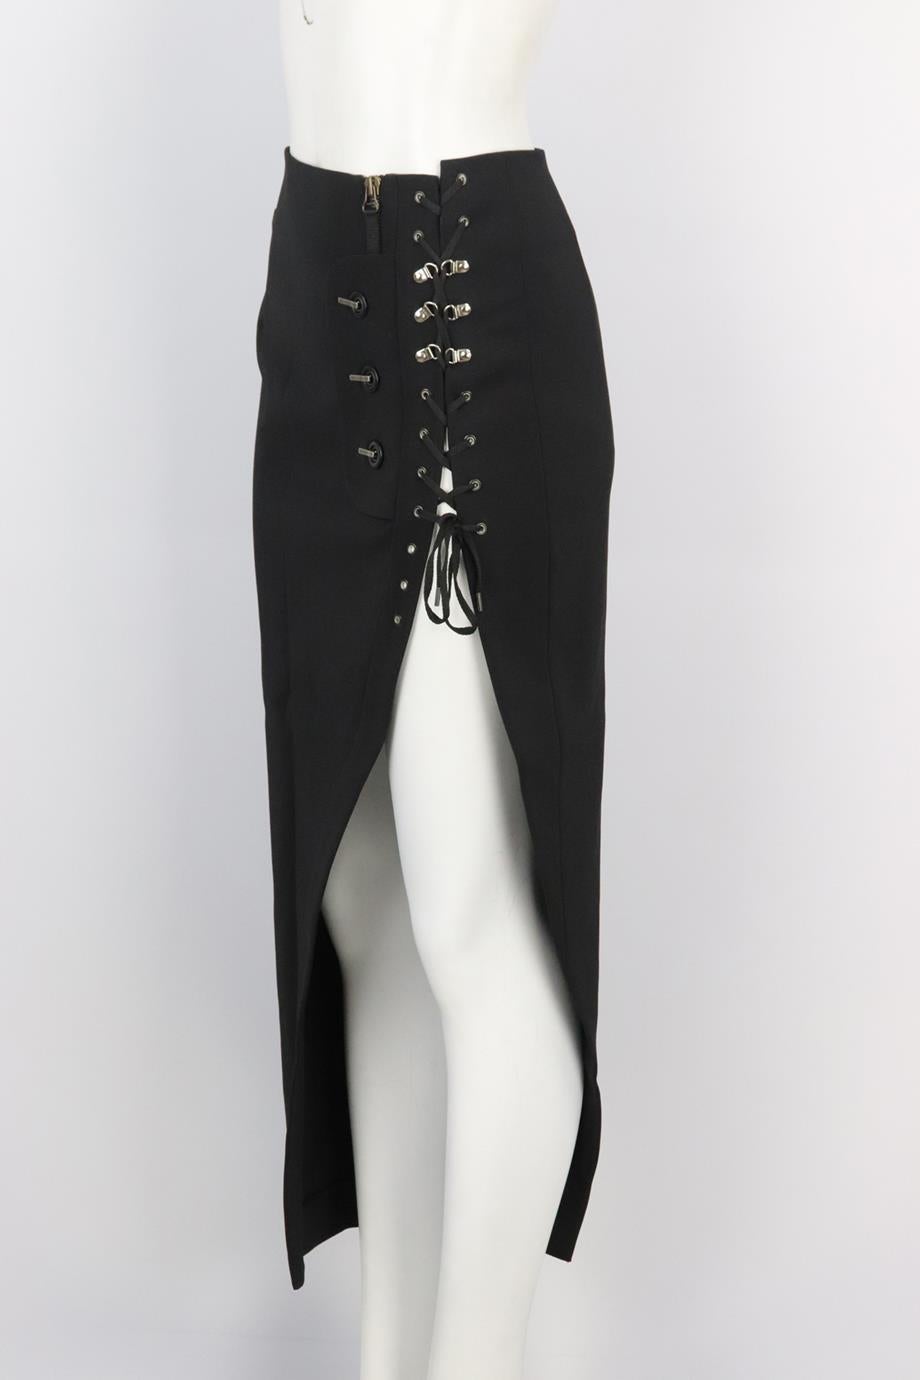 Black Anthony Vaccarello Asymmetric Lace Up Wool Midi Skirt Fr 36 Uk 8